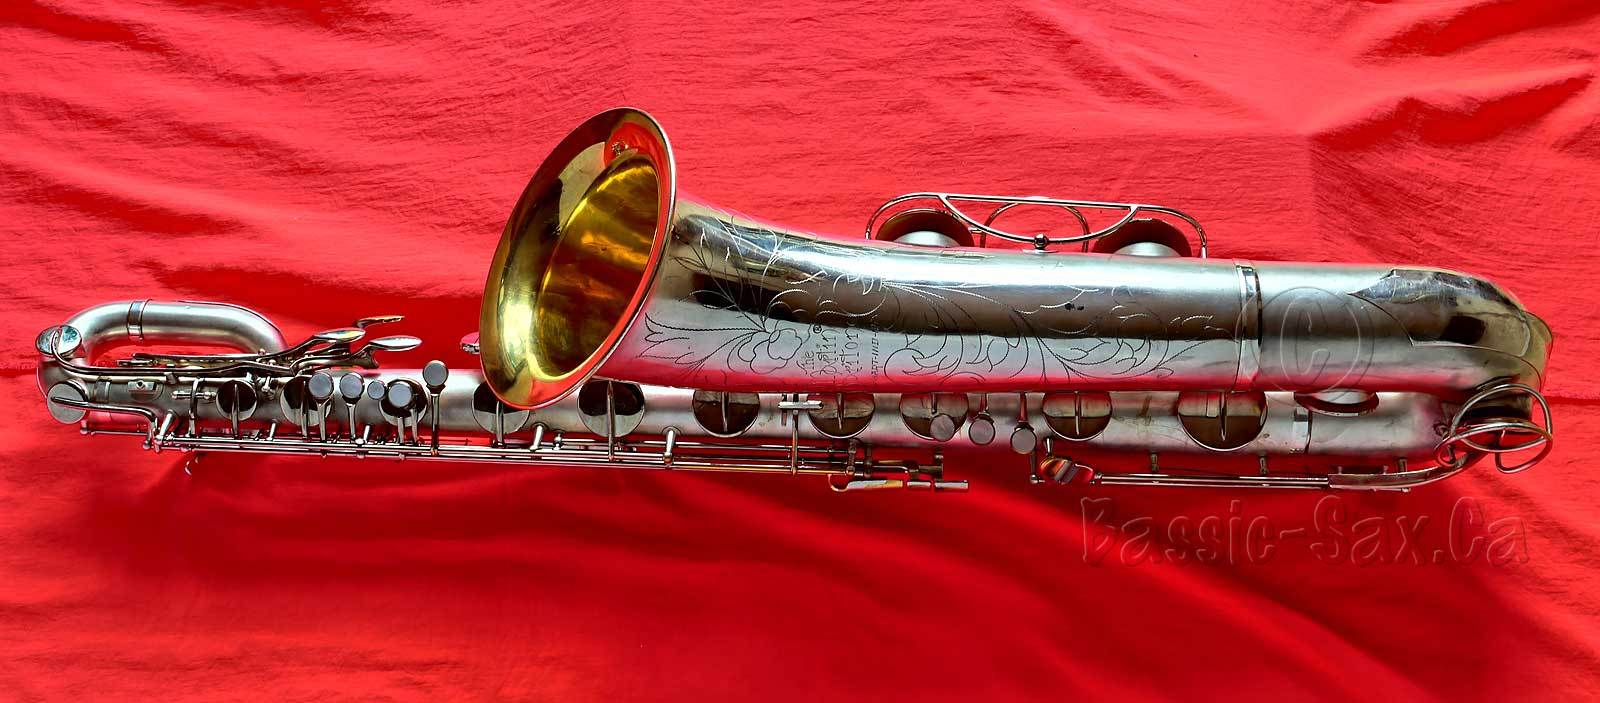 Saxophone players & flu season